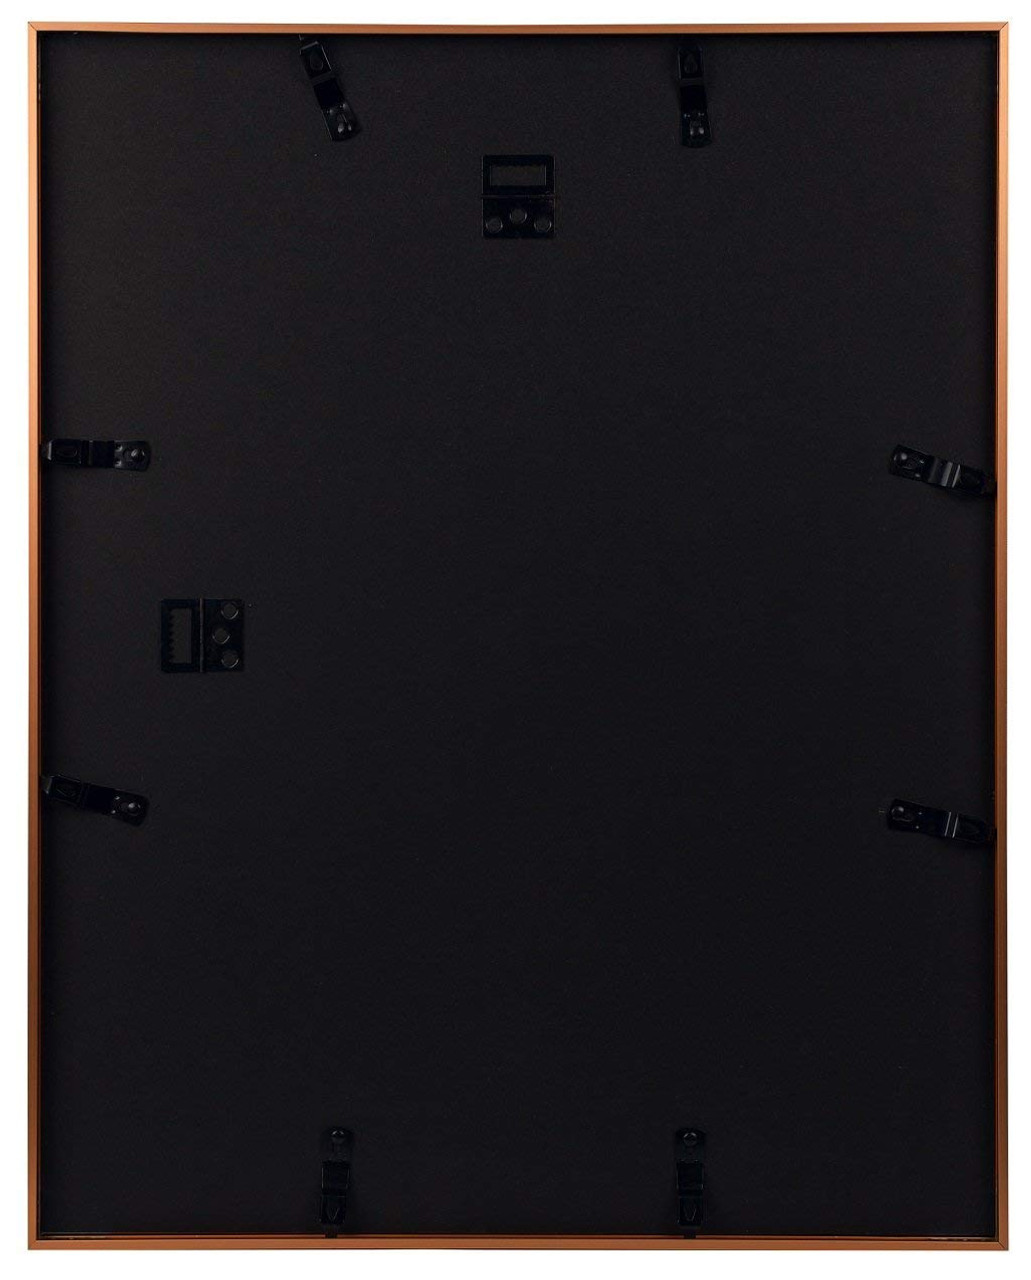 16x20 Frame for 11x14 Picture Rose Gold Satin Aluminum (4 Pcs per Box)